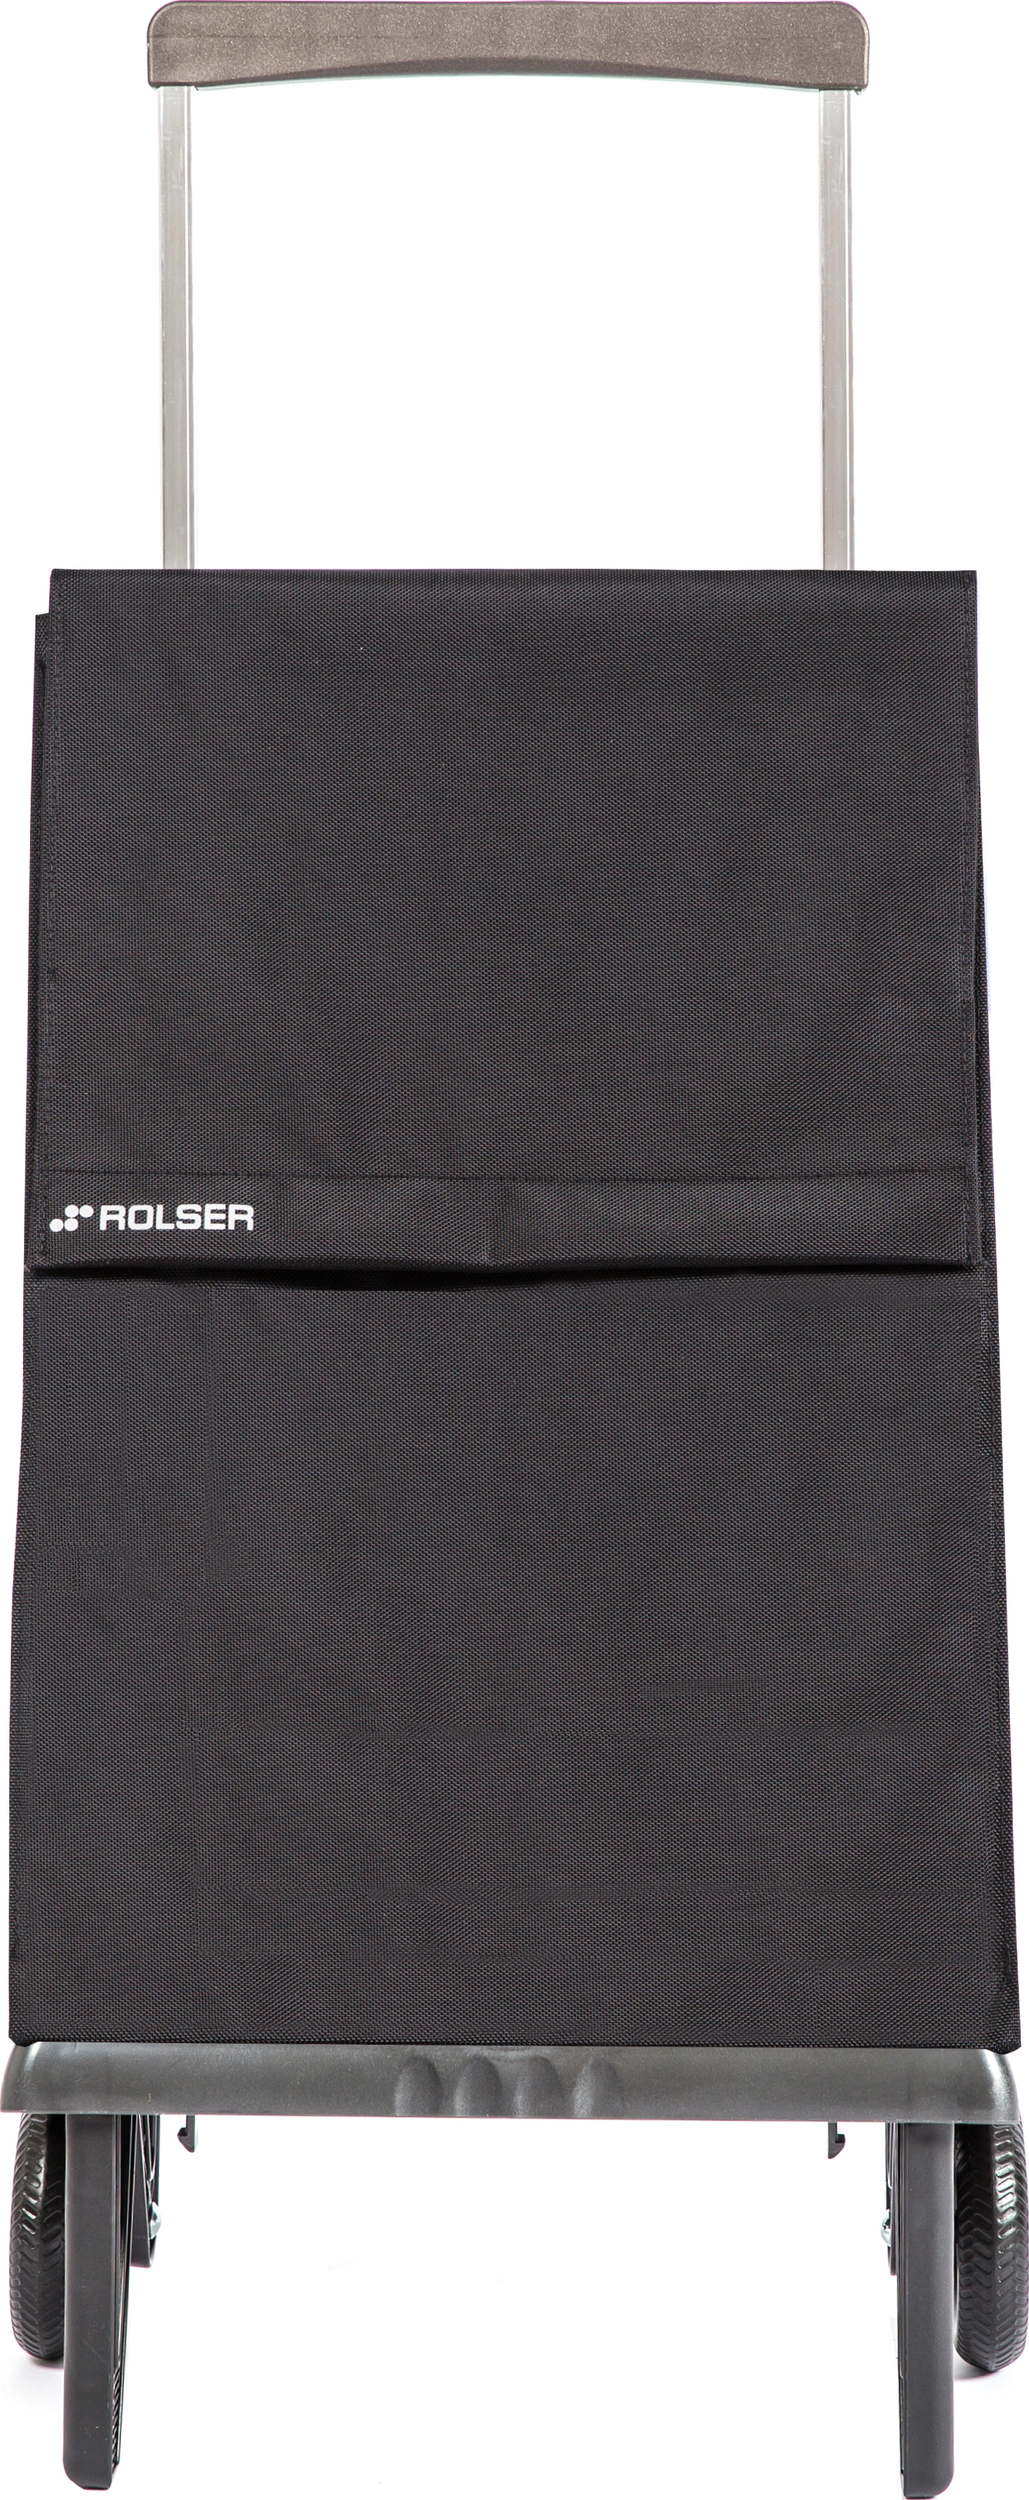 Rolser Plegamatic Shopping cart foldable - PLE001 Negro